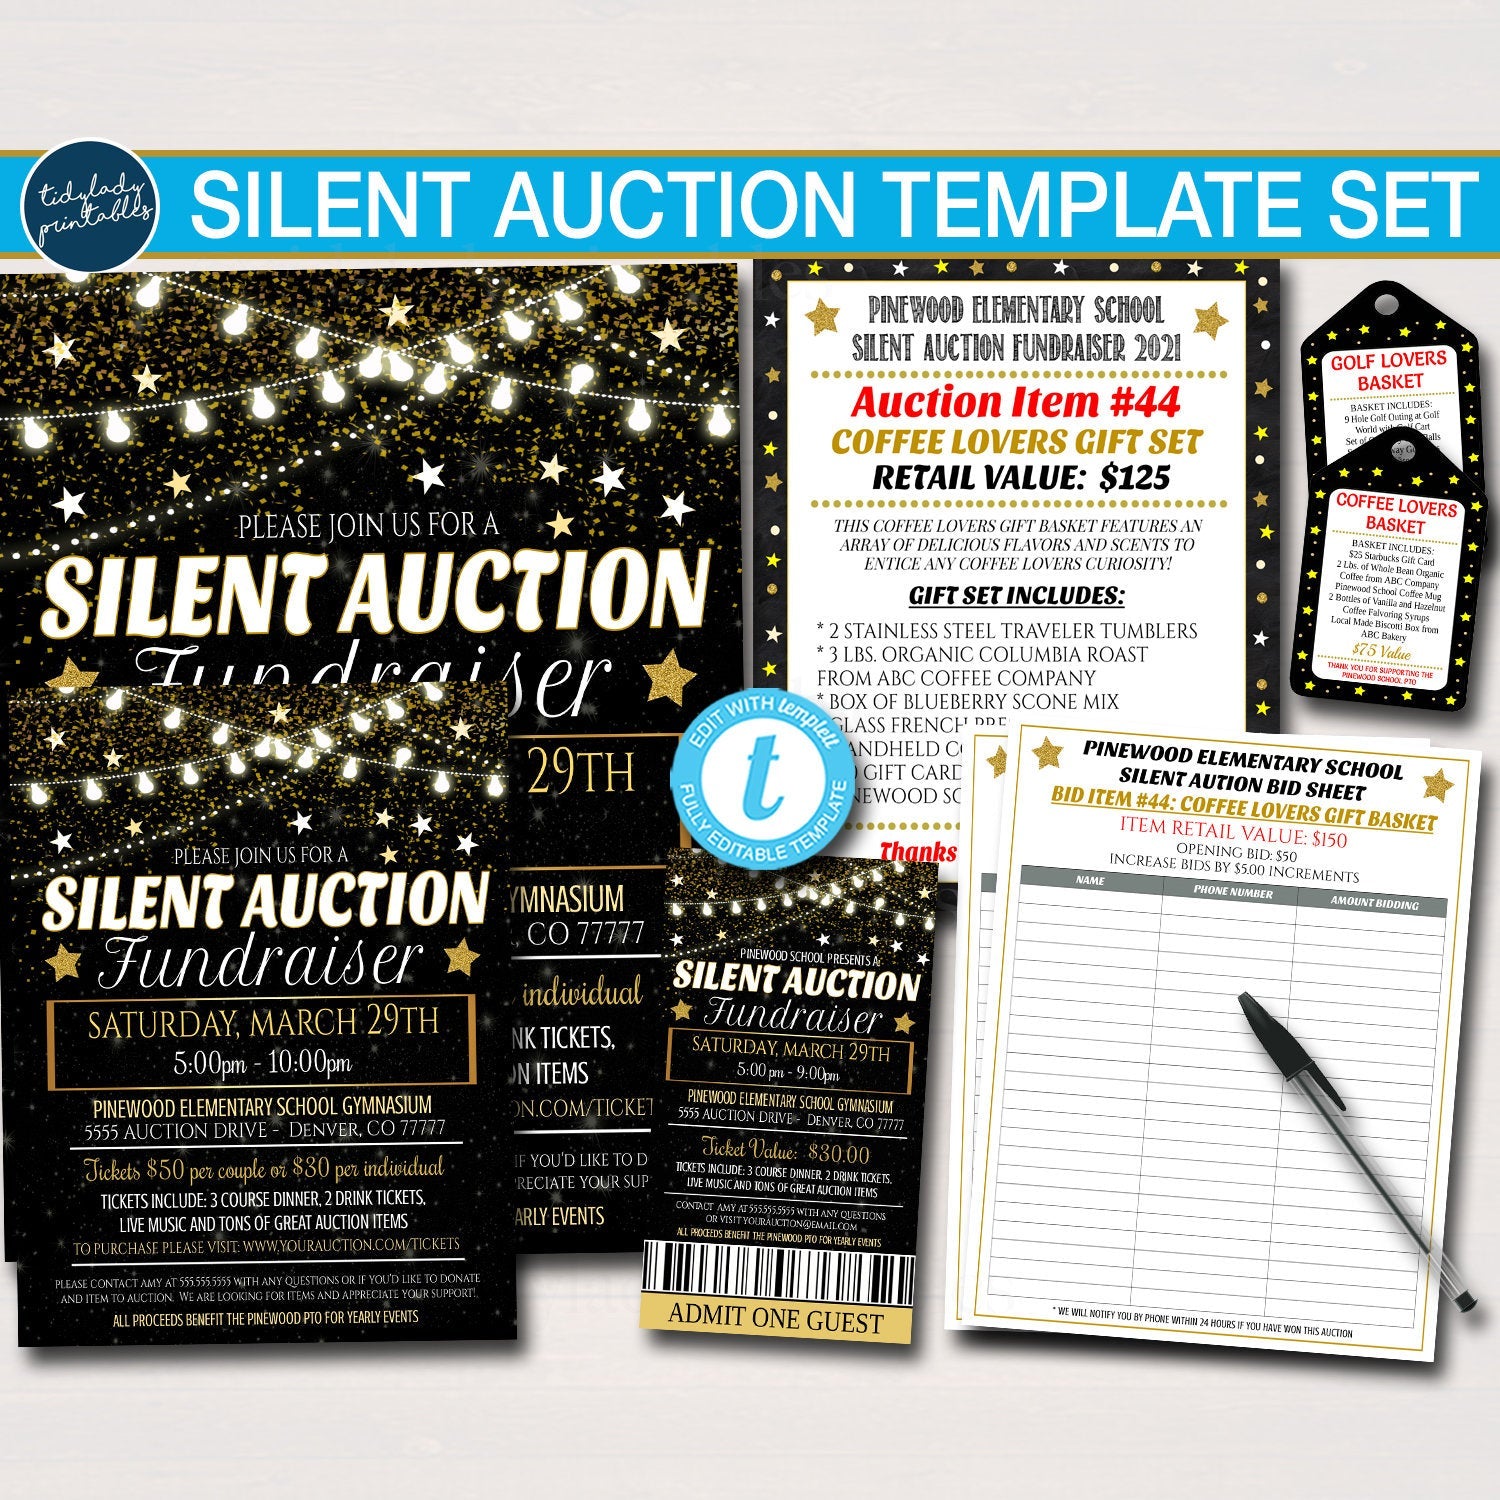 silent auction item sign